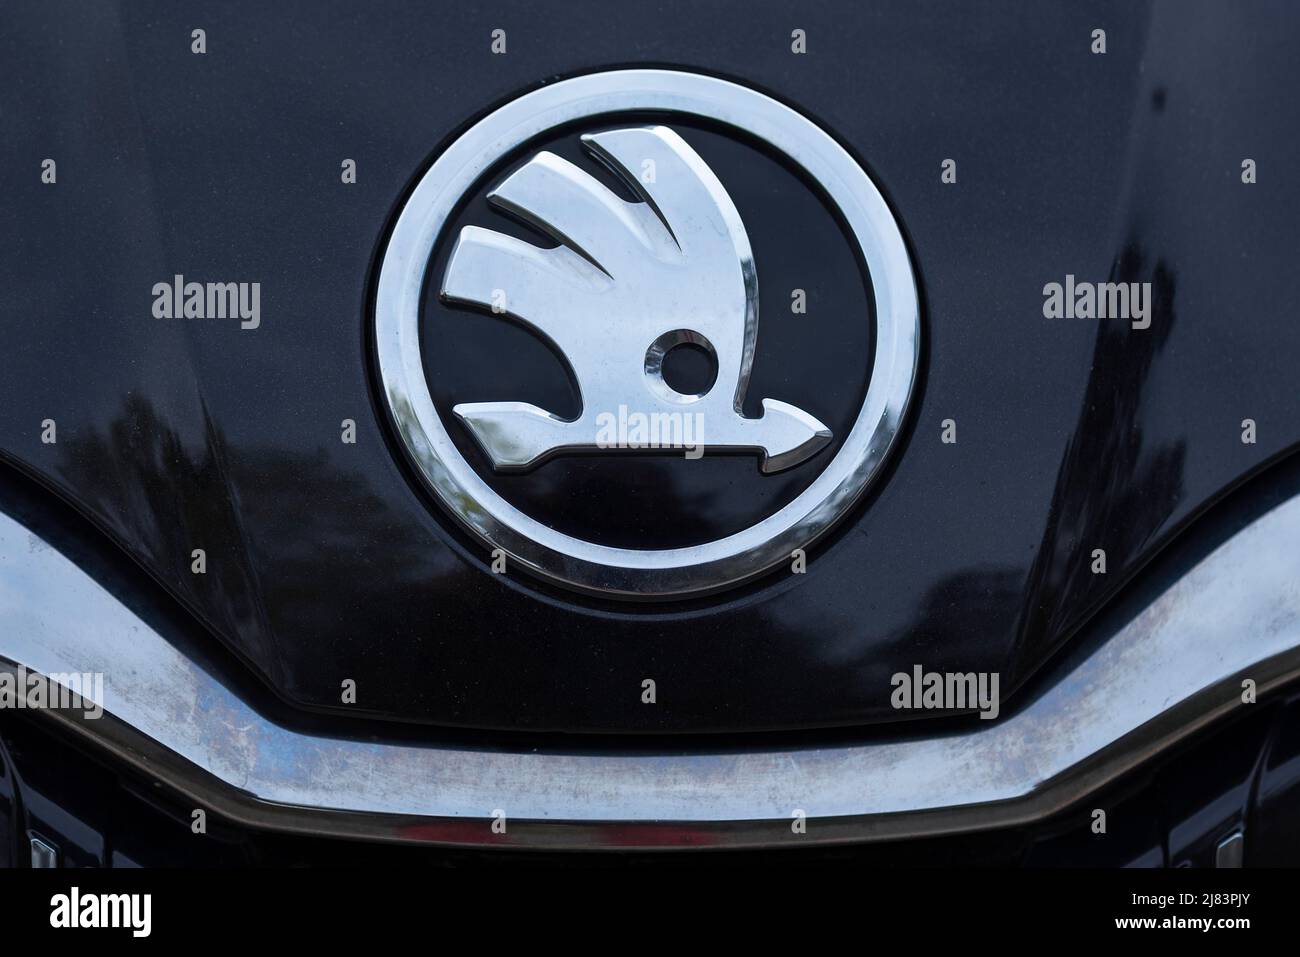 Car brand of the company Skoda, Bavaria, Germany Stock Photo - Alamy